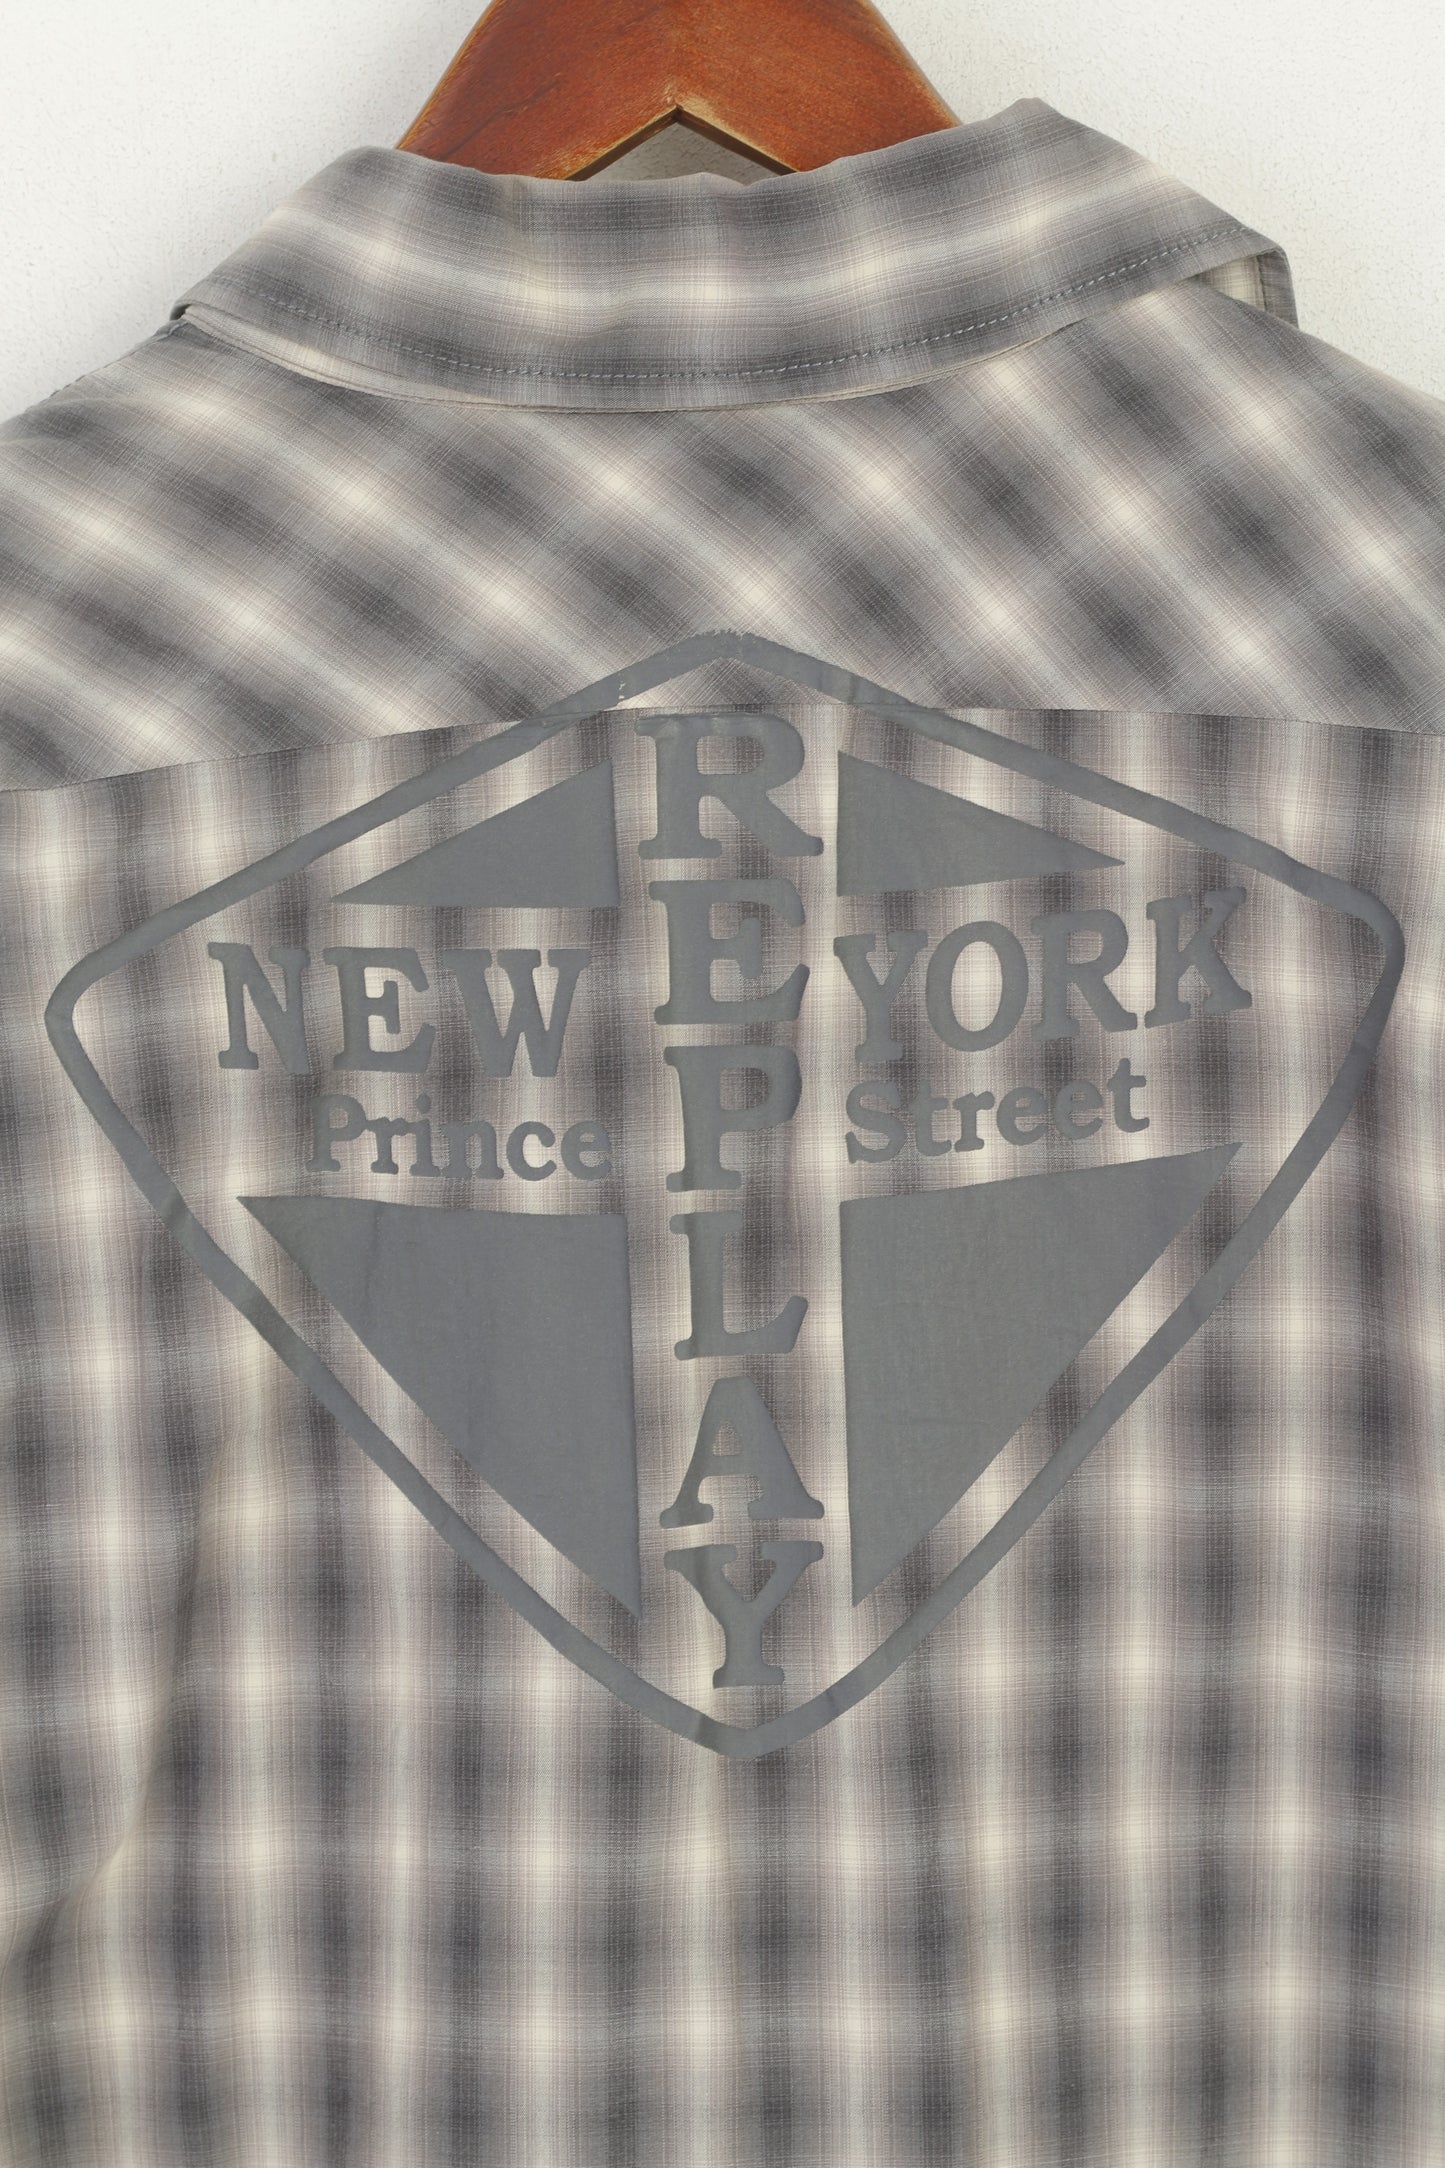 Replay Men L (M) Casual Shirt Grey Check Cotton New York Prince Street Top